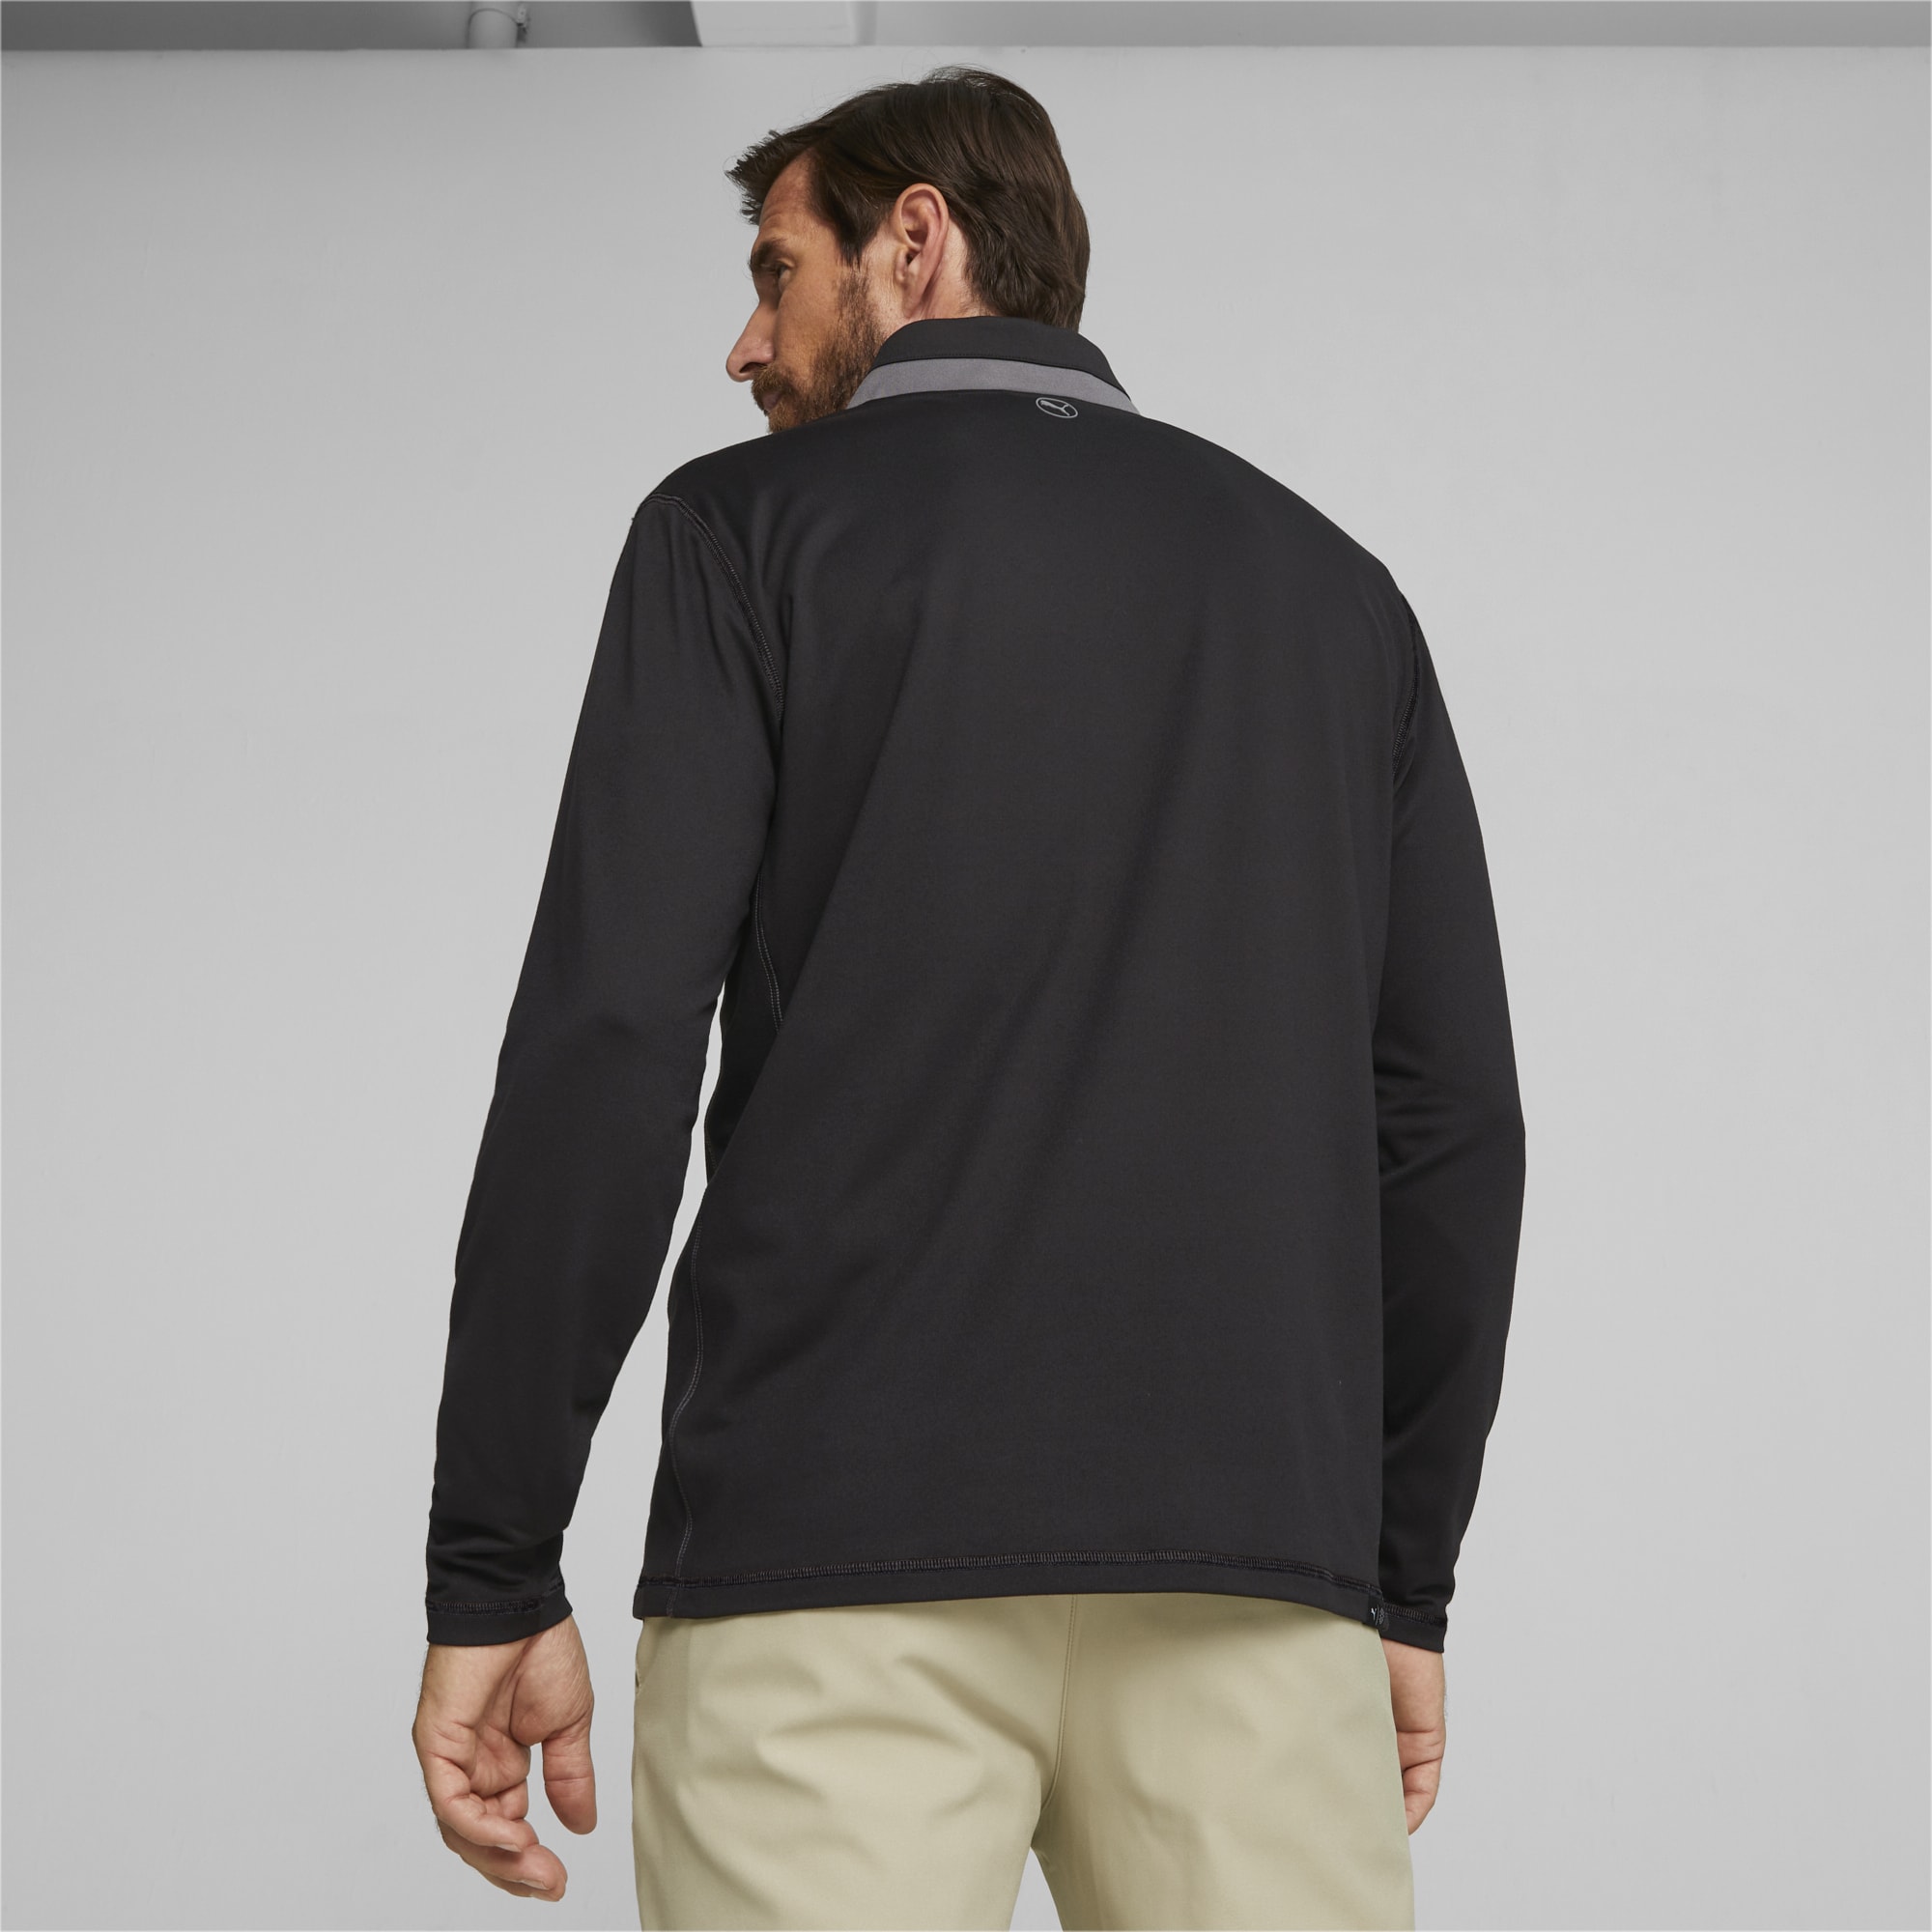 PUMA Men's Lightweight Golf Pullover Top, Black/Slate Sky, Size S, Clothing